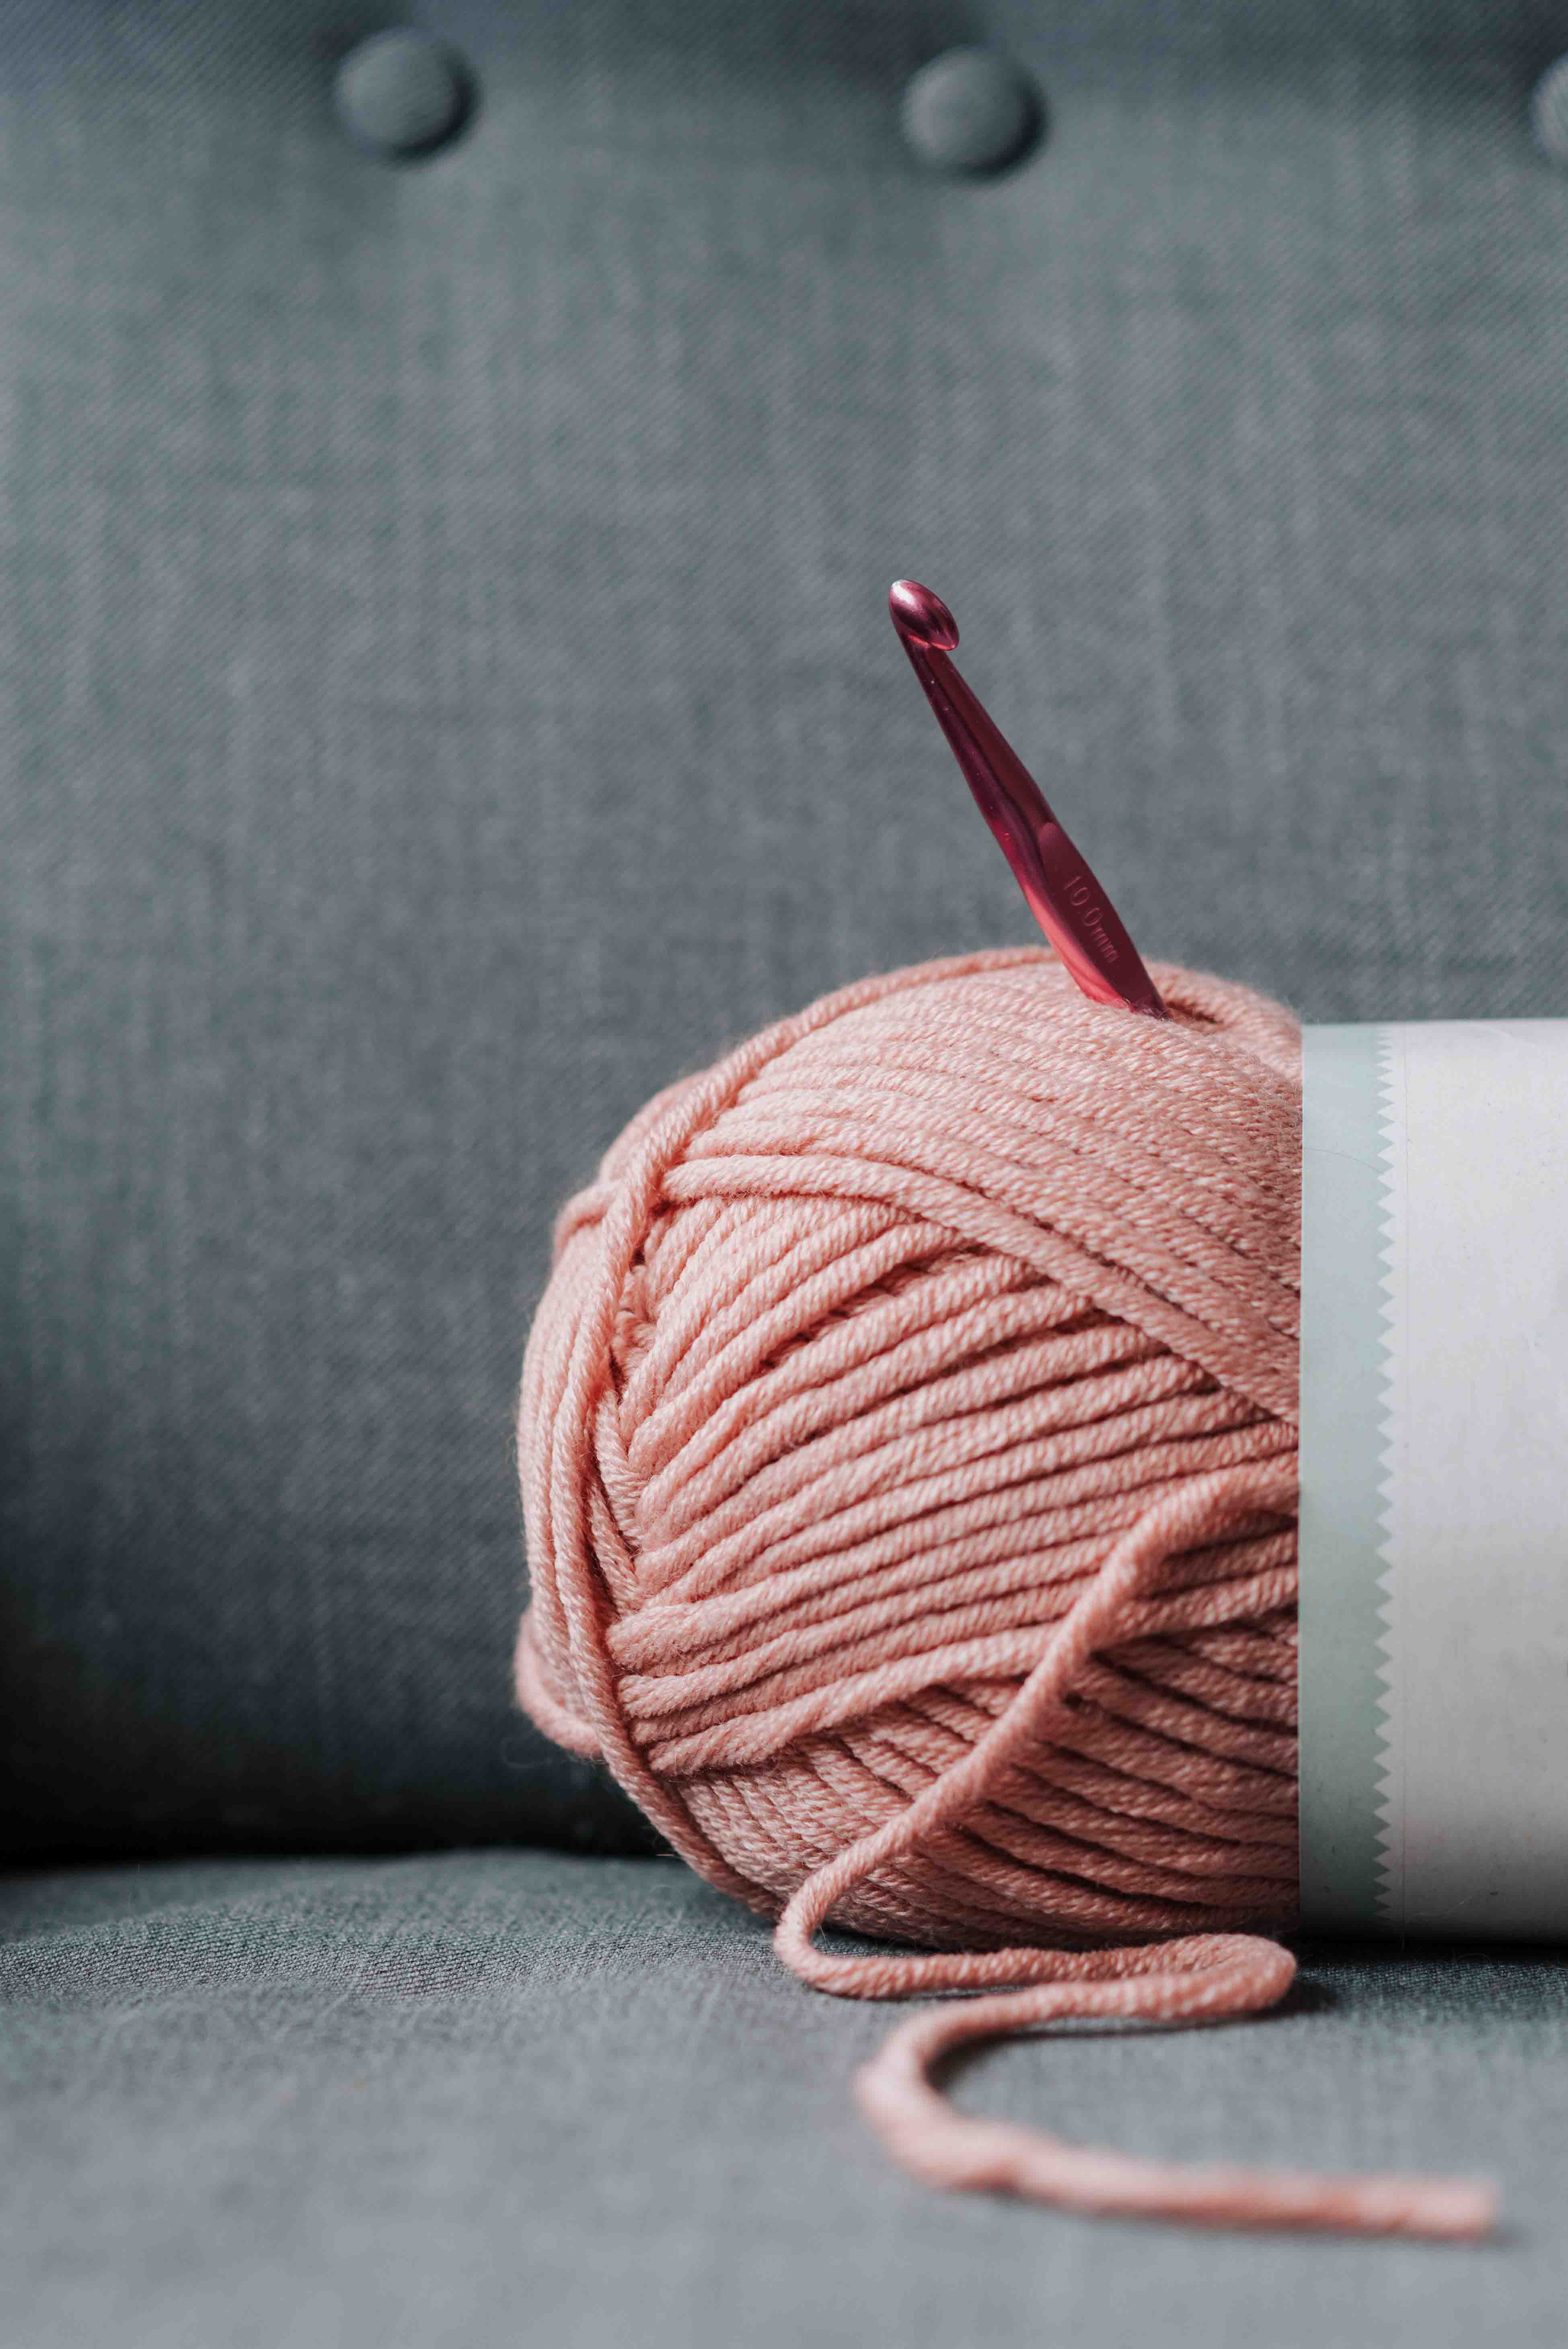 Handmade-spinus cotton thread with crochet hook